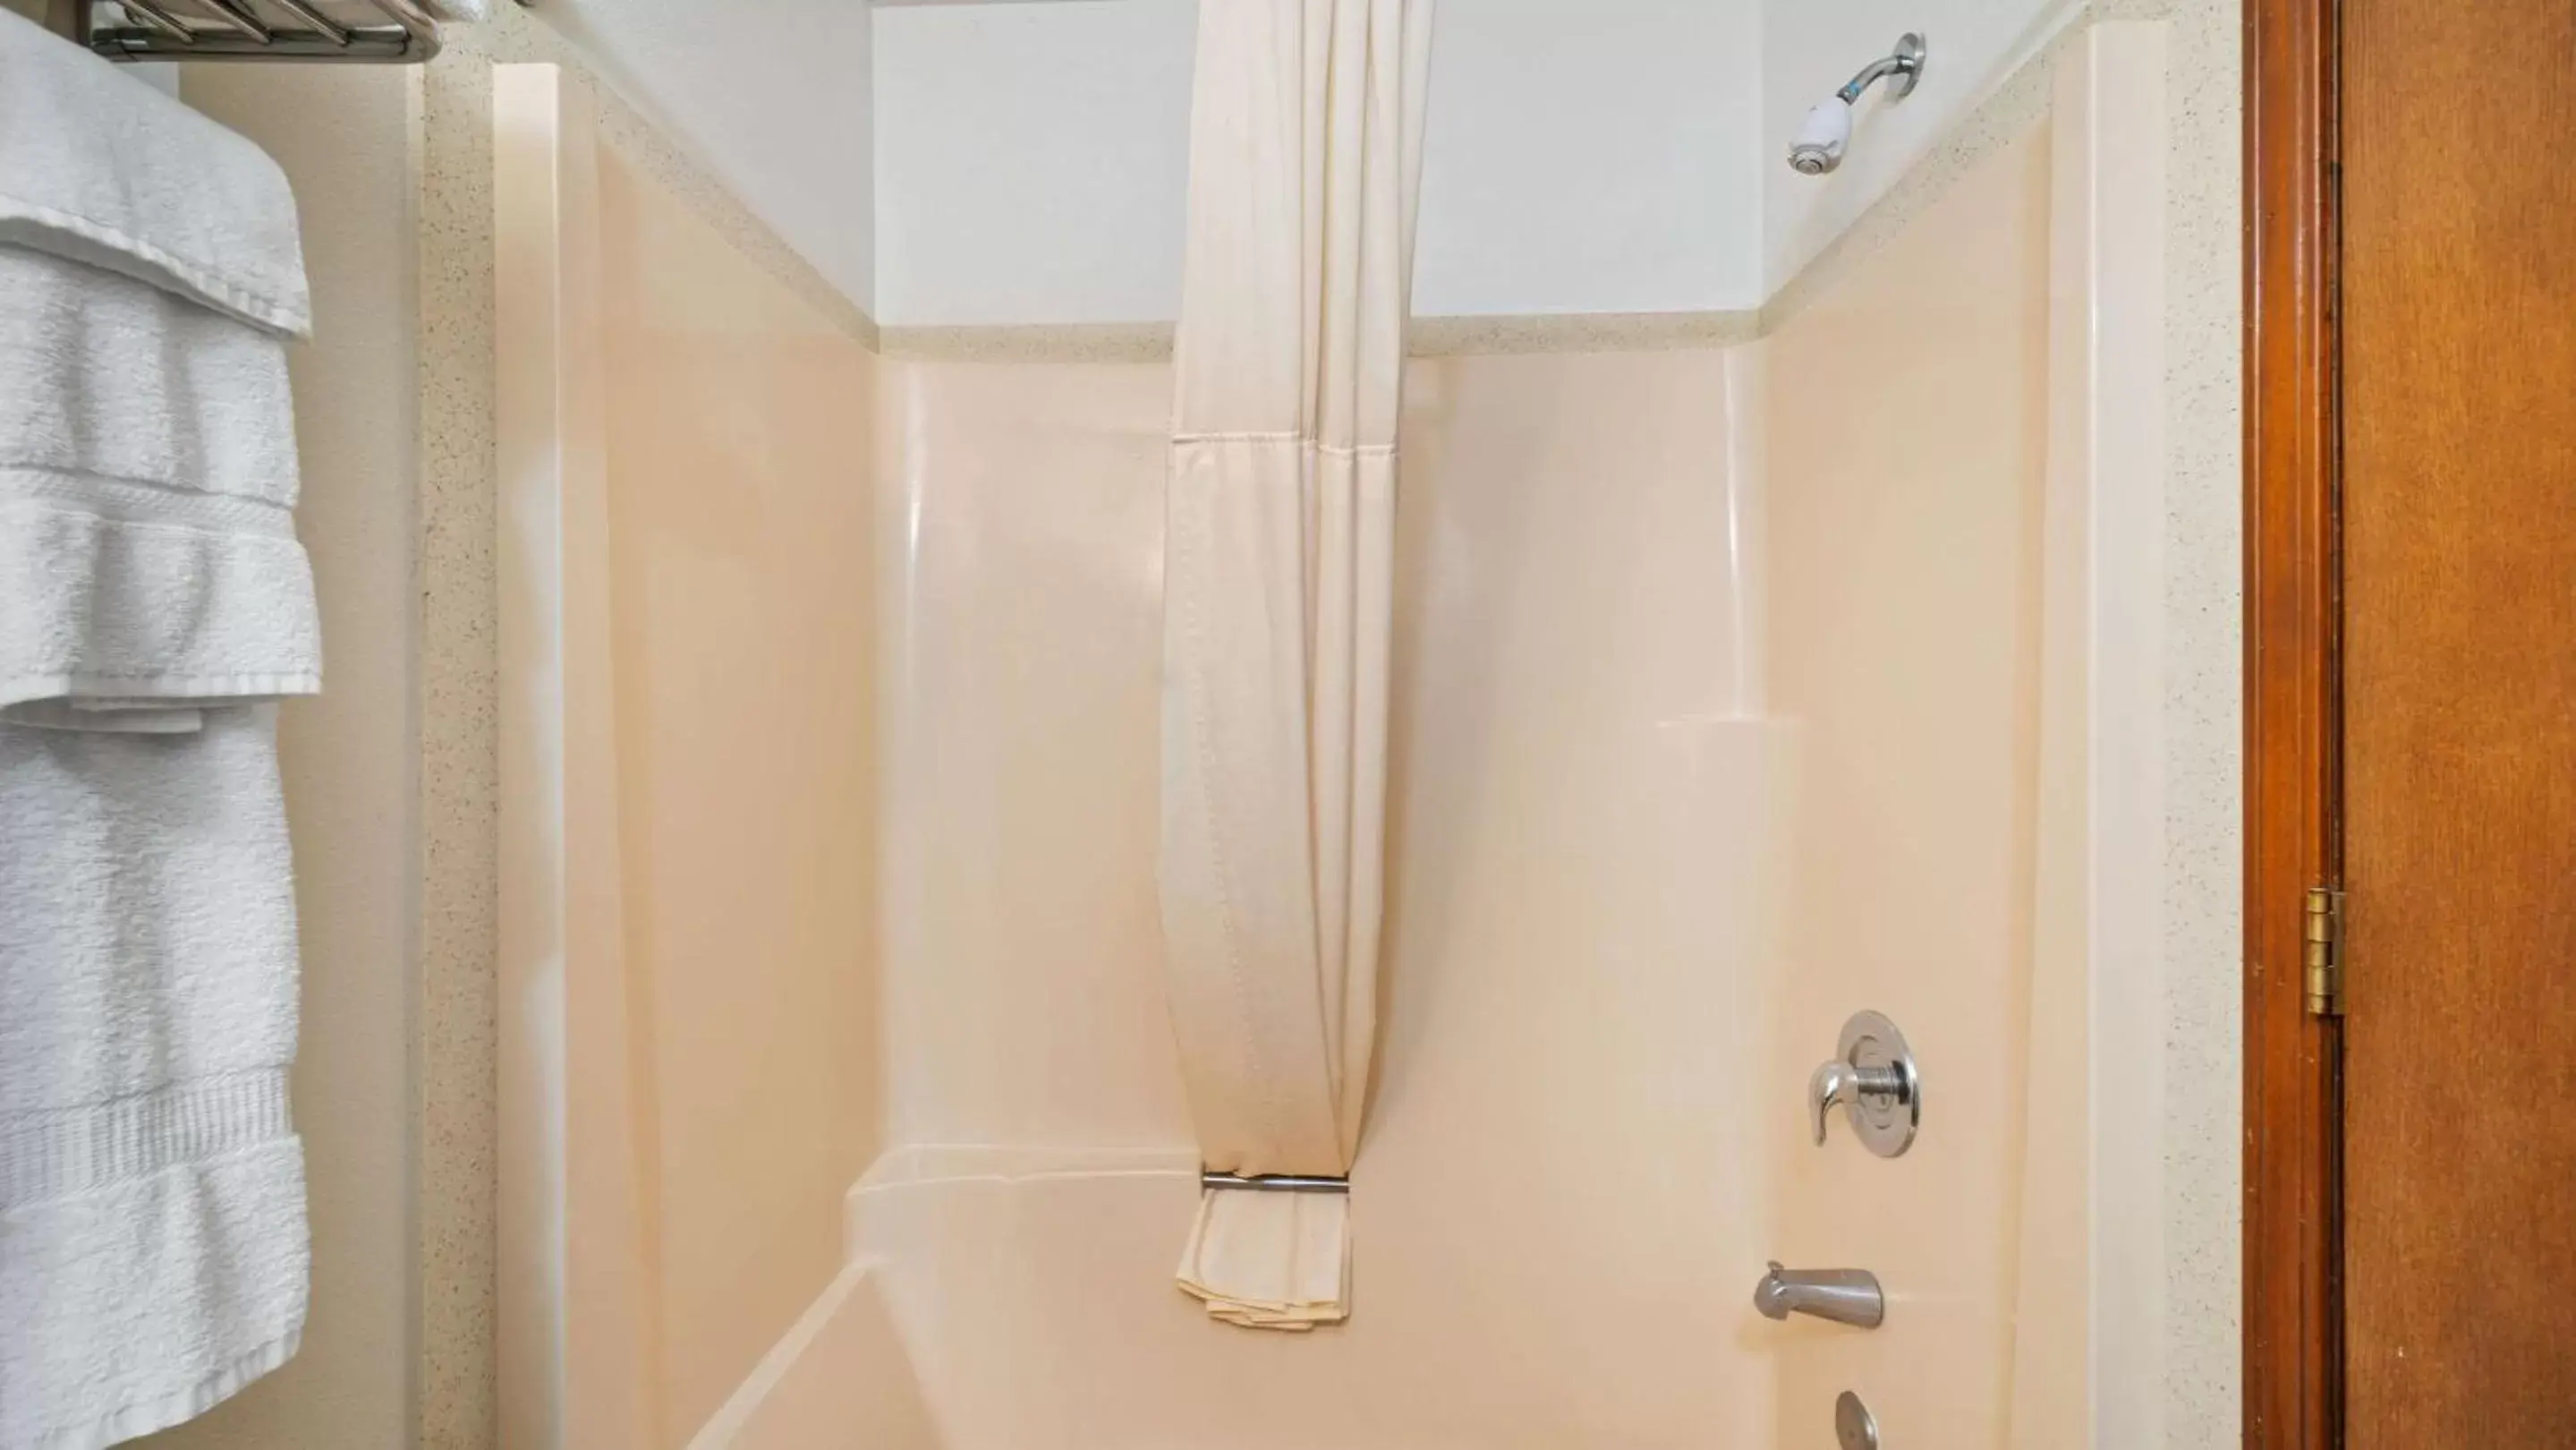 Bedroom, Bathroom in Clarion Hotel & Suites Fairbanks near Ft. Wainwright